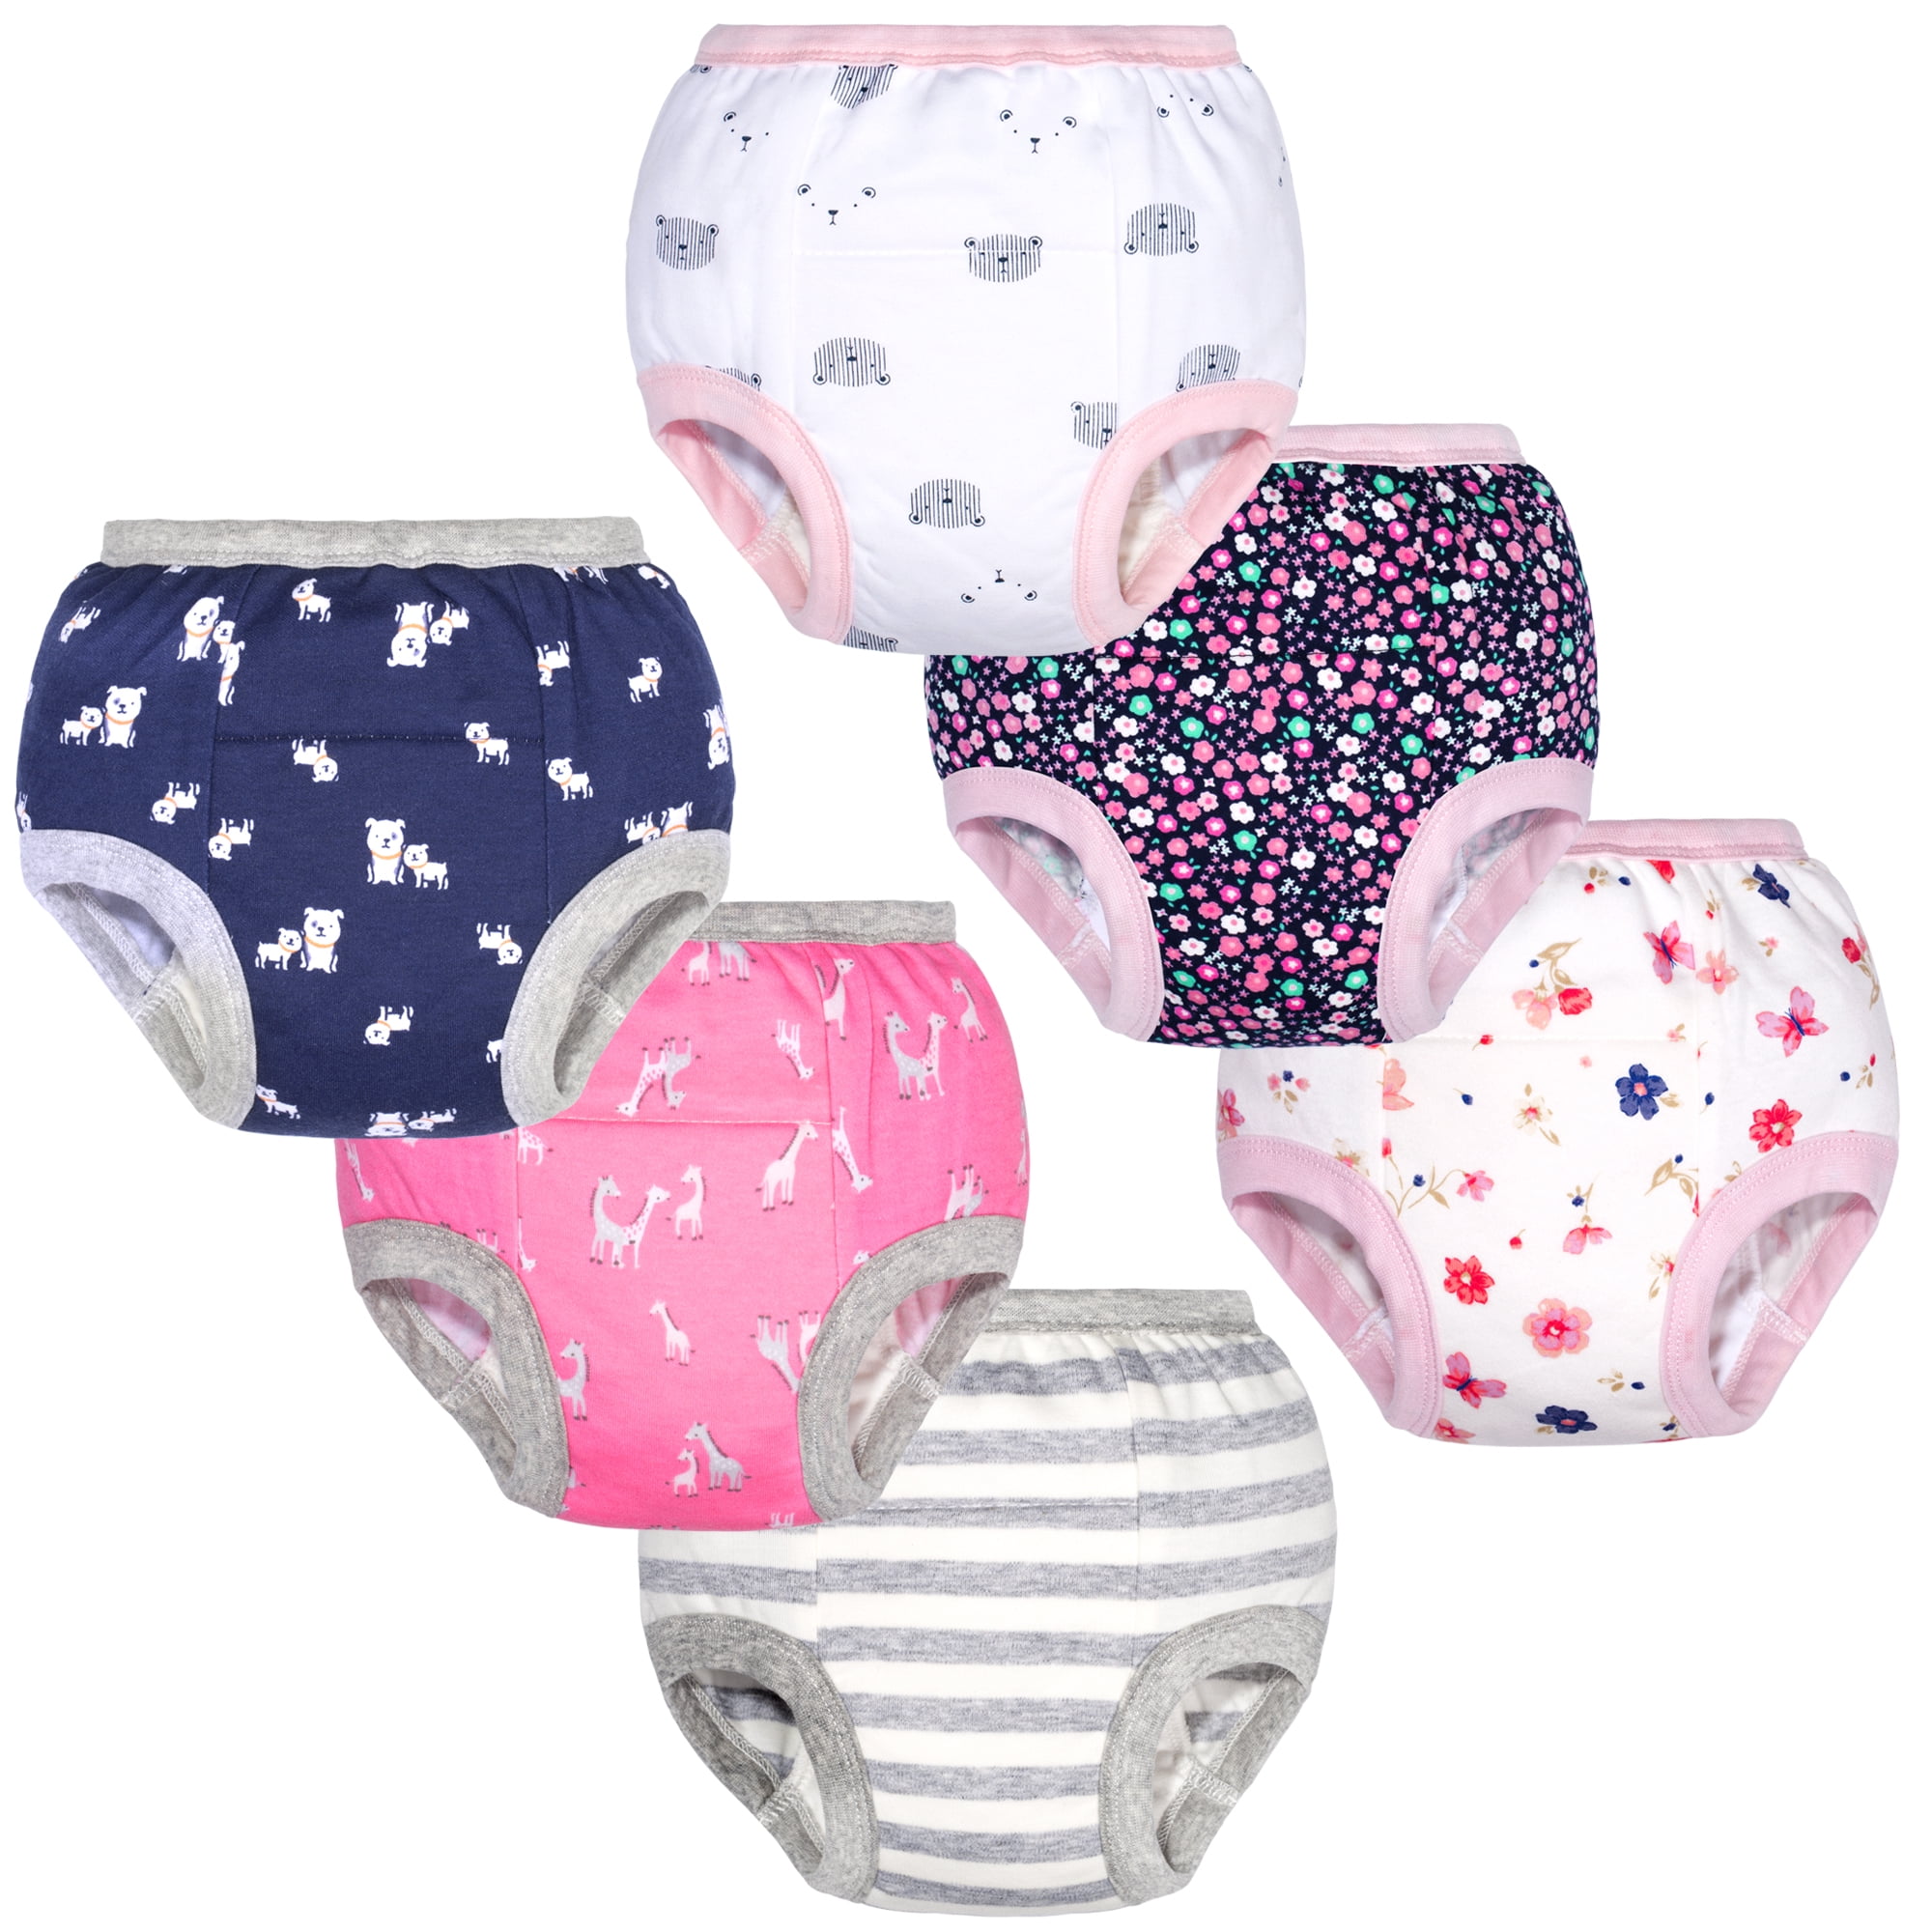 BIG ELEPHANT Baby Girl’s Pure Cotton Pee Potty Training Pants Underwear Pink Series Print Design 6-Pack Set 